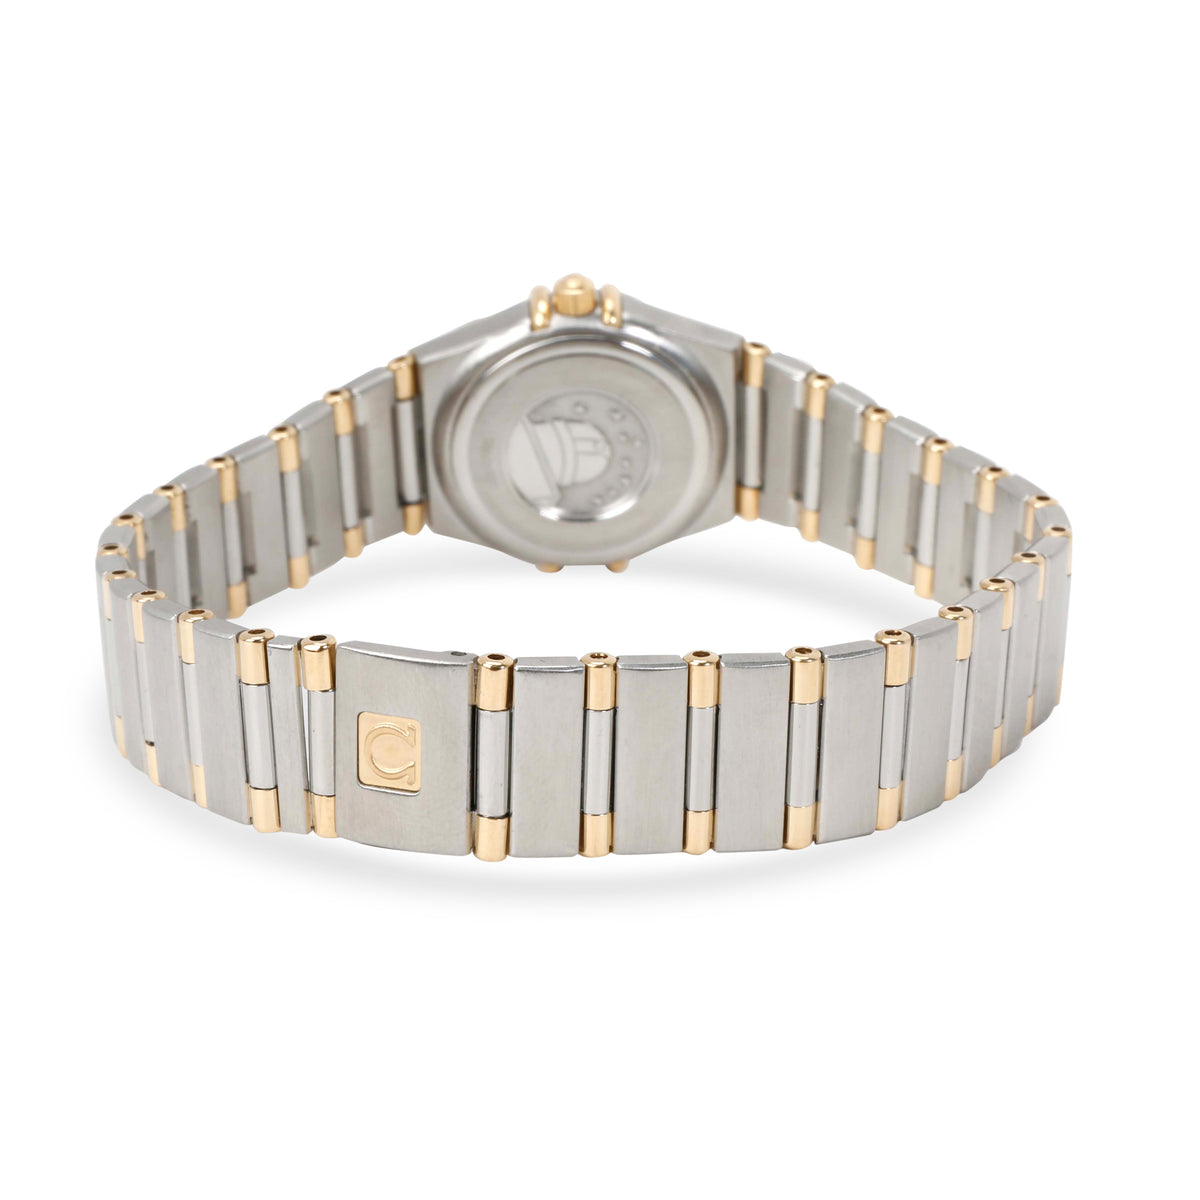 Omega Constellation Quartz 1372.30 Women's Watch in 18kt Stainless Steel/Yellow